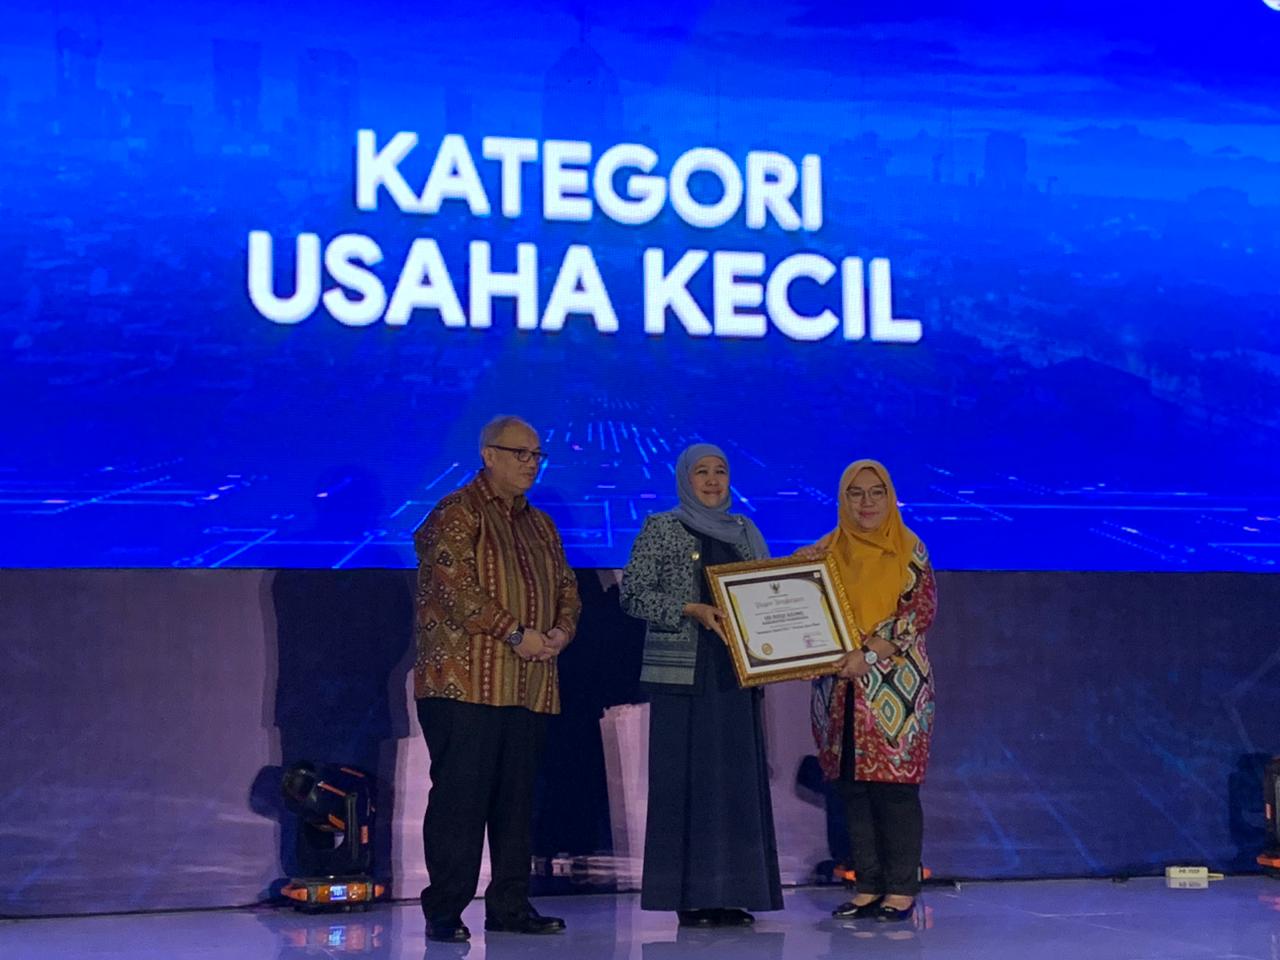 UD Rizky Agung (Ibu Lusia Widiarini) Kecamatan Ngrayun Kabupaten Ponorogo mendapatkan penghargaan Investment Award 2022 Provinsi Jawa Timur kategori Usaha Kecil dalam acara Jatim Investment Leaders Forum dan Award (JILFA 2023).